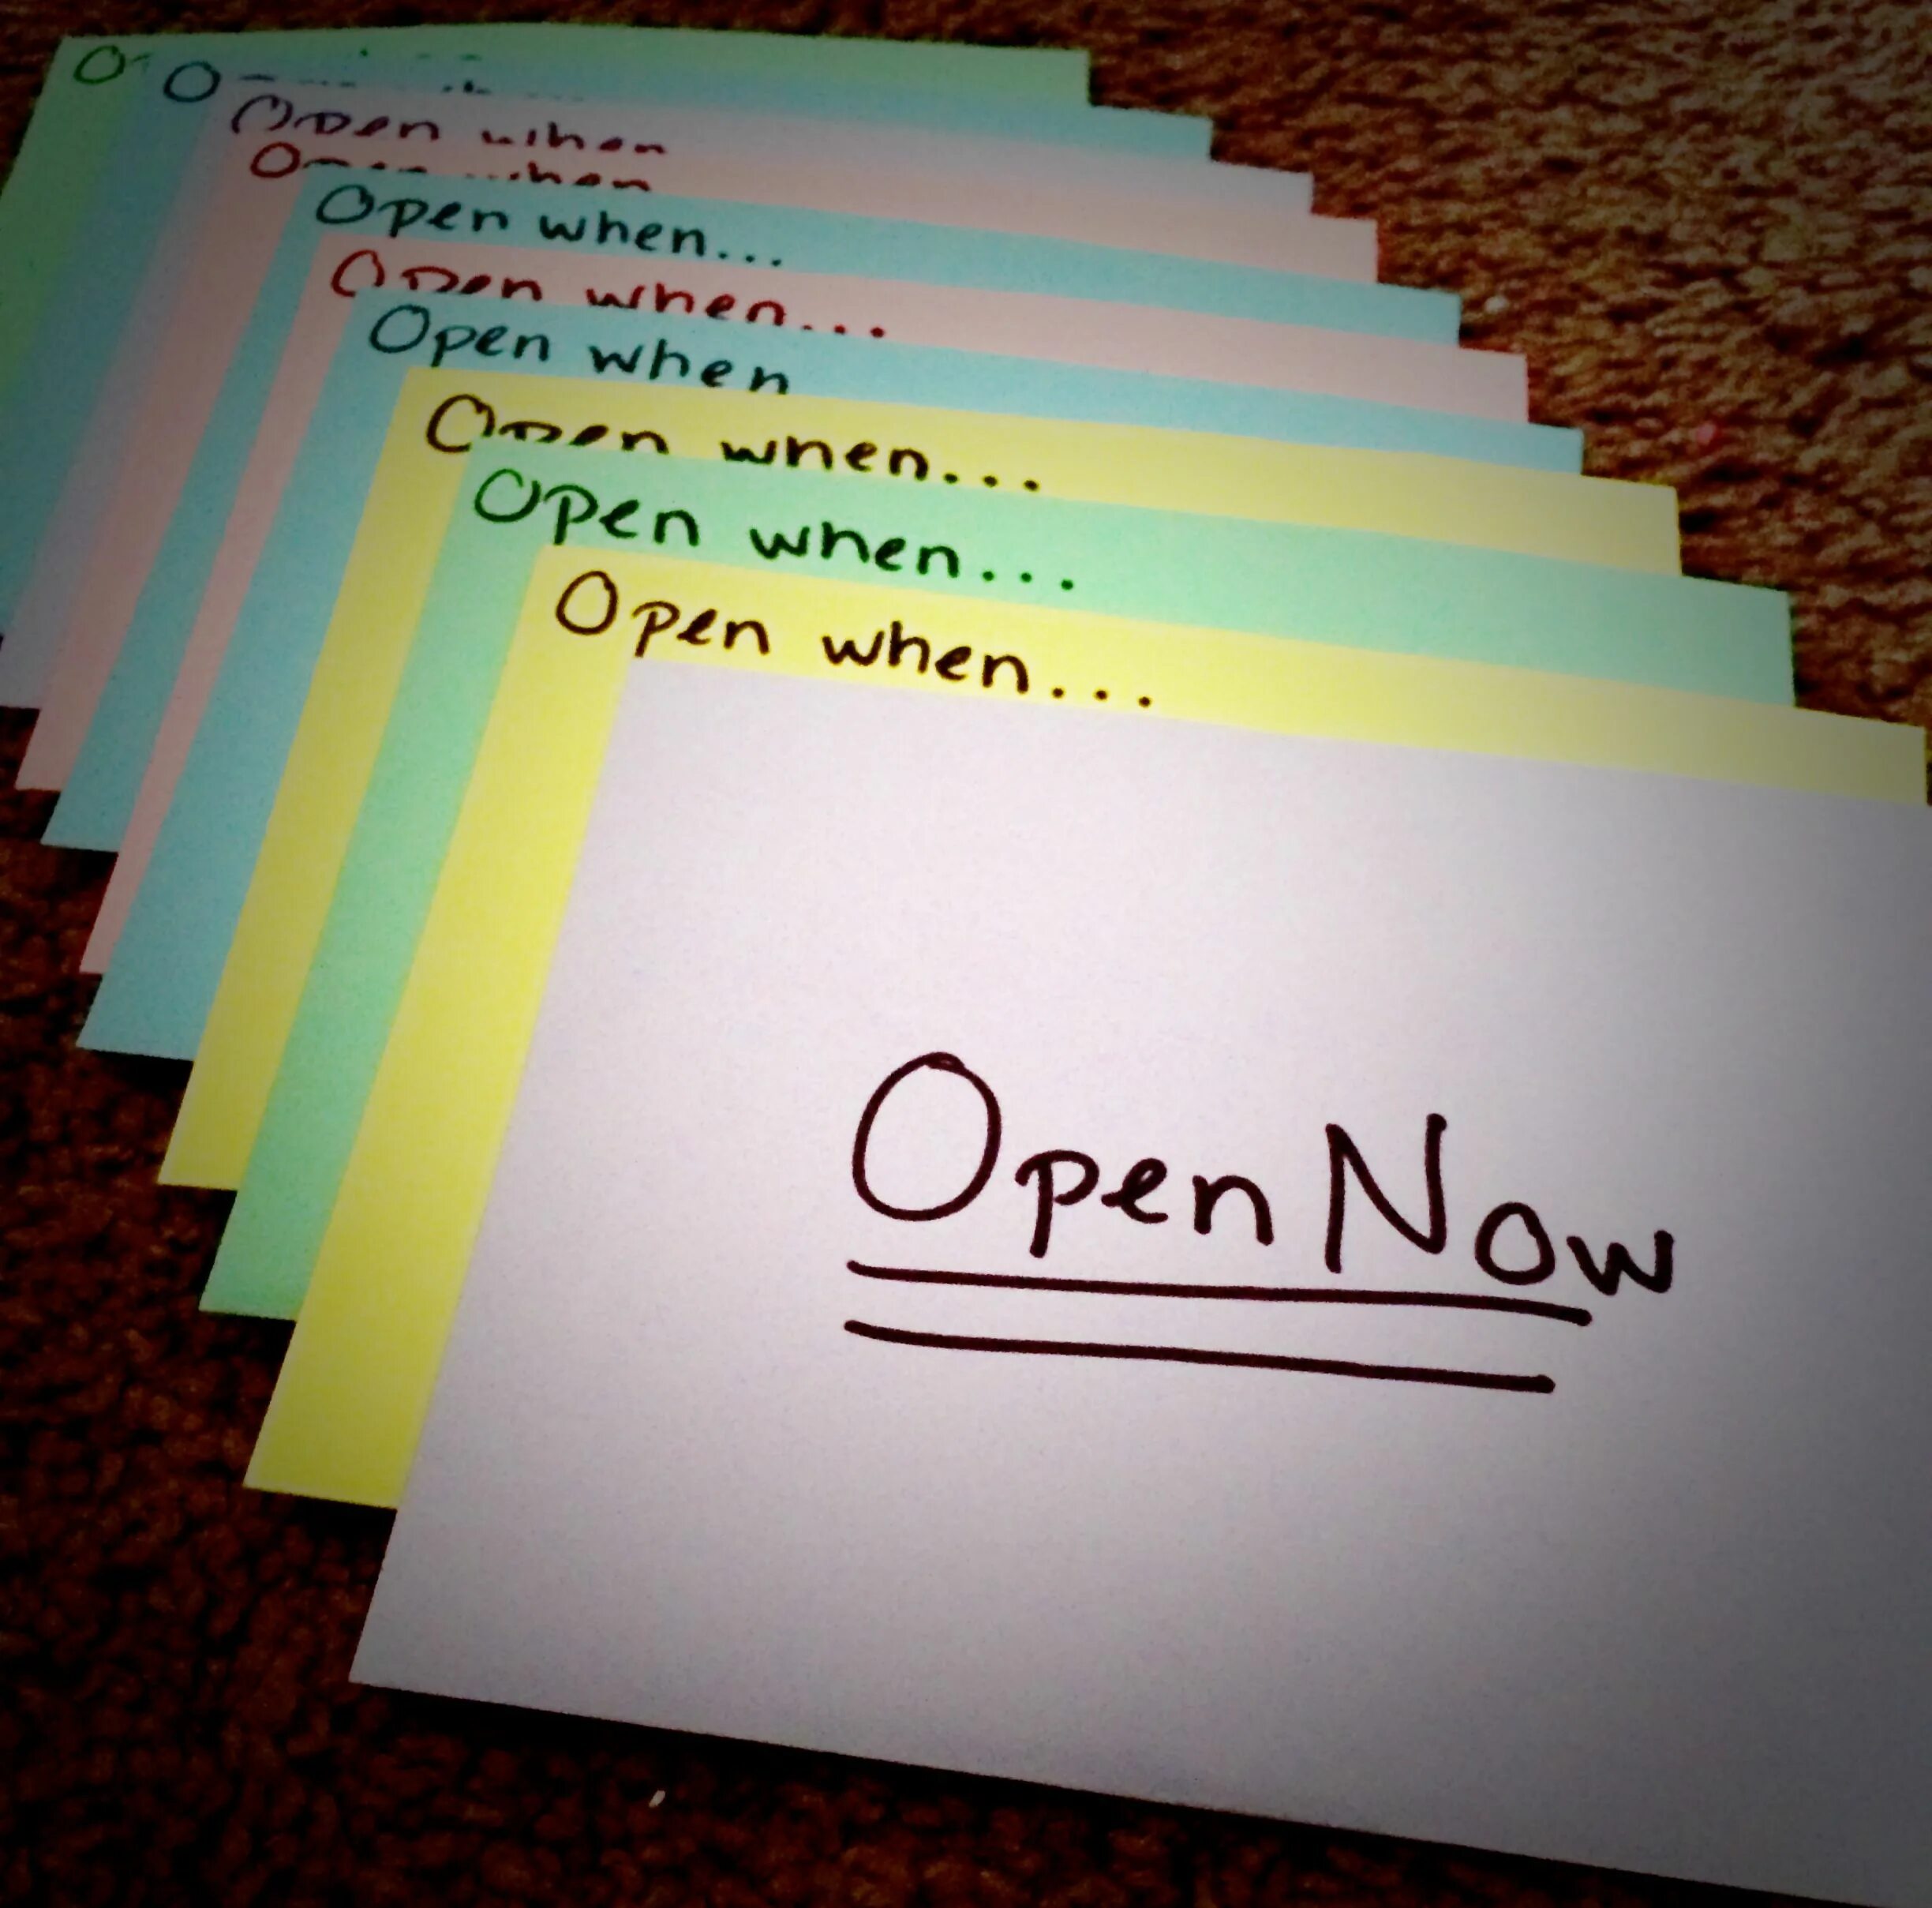 When they open a new. Open when. Open when ideas. Gift idea for friends. Open if Gift ideas.